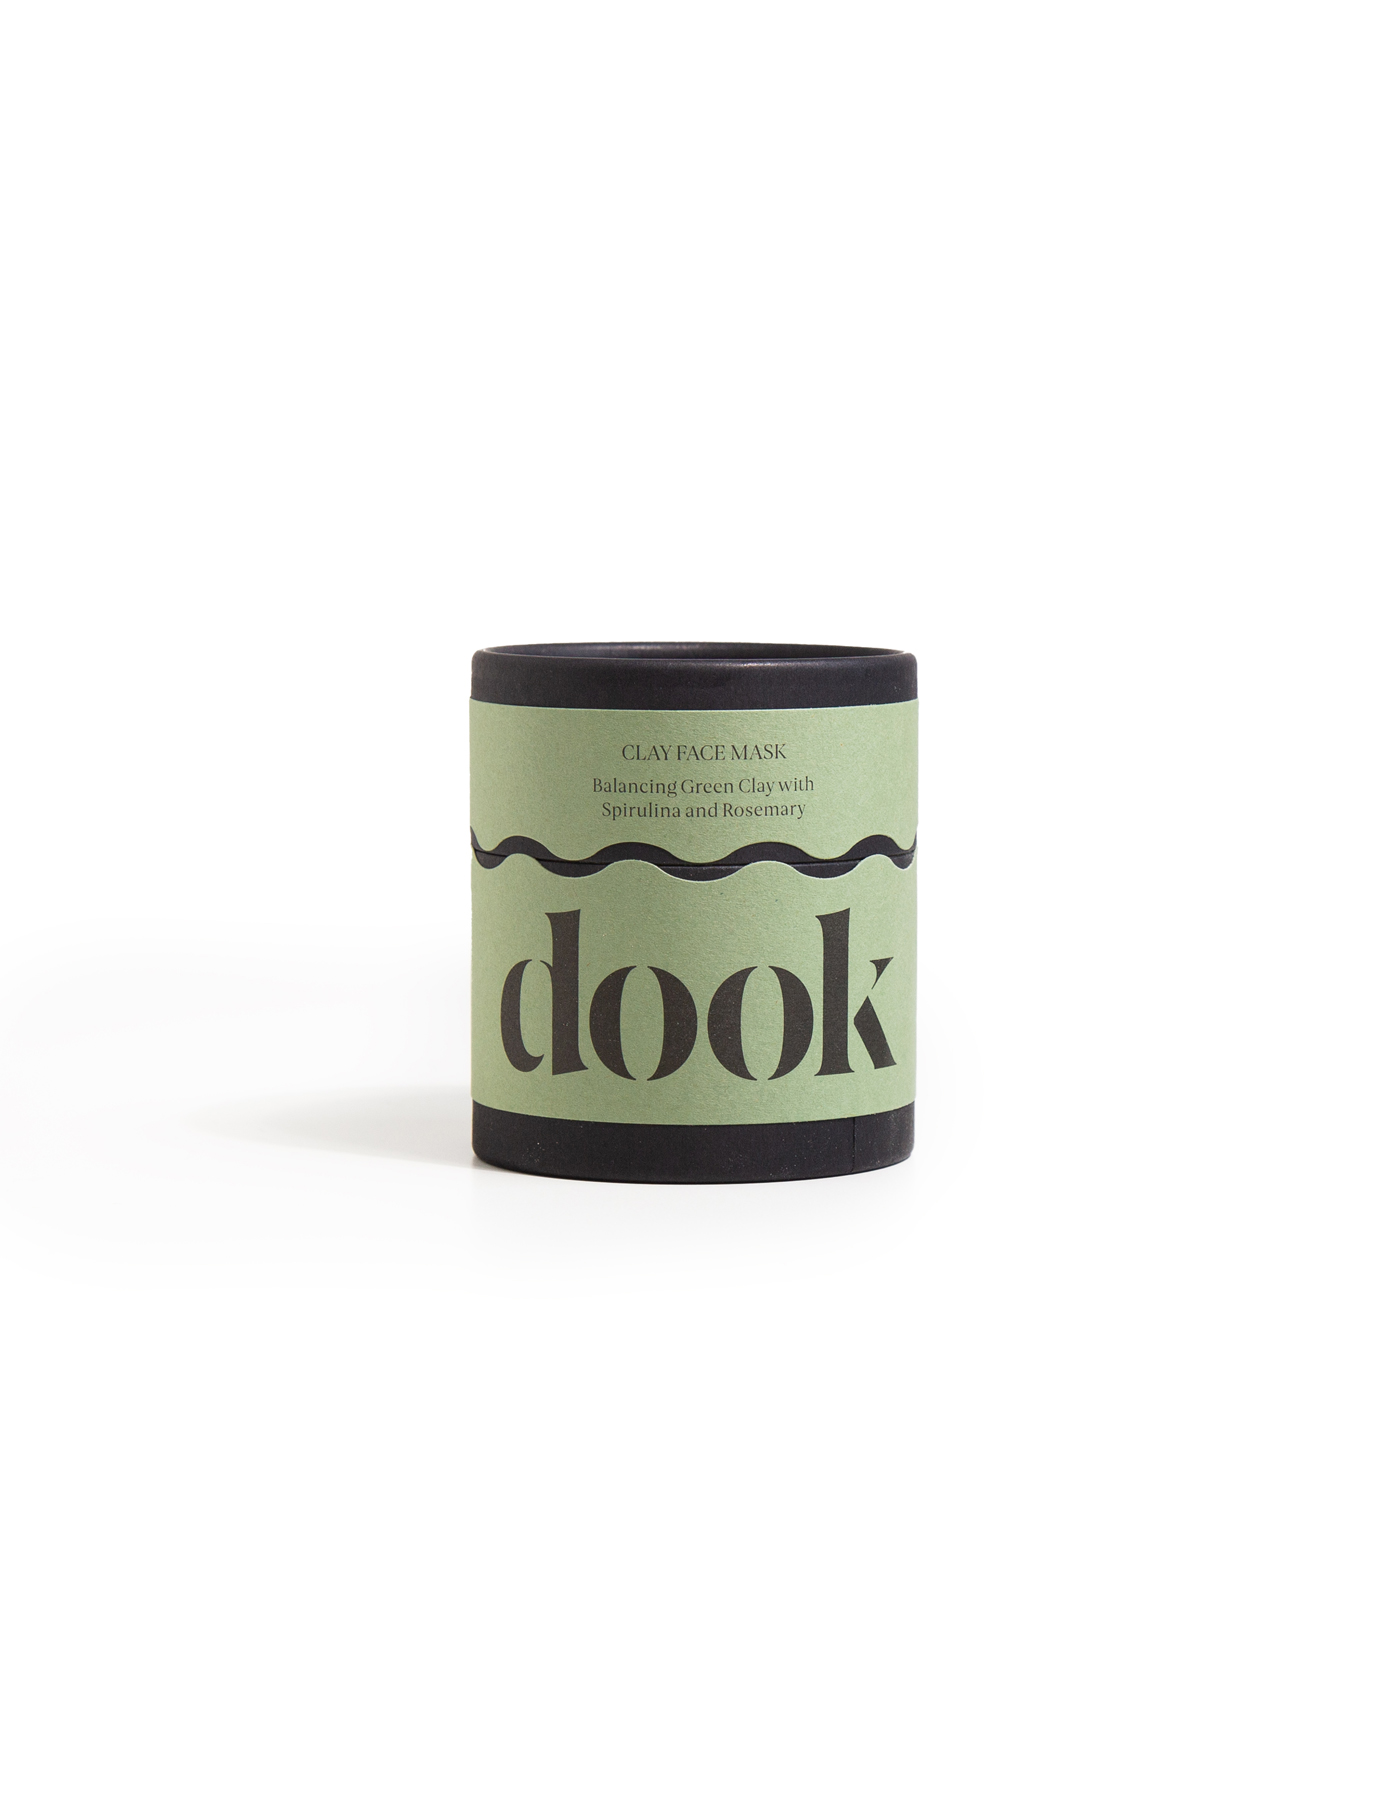 Dook Ltd Balancing Green Clay with Spirulina and Rosemary Clay Mask